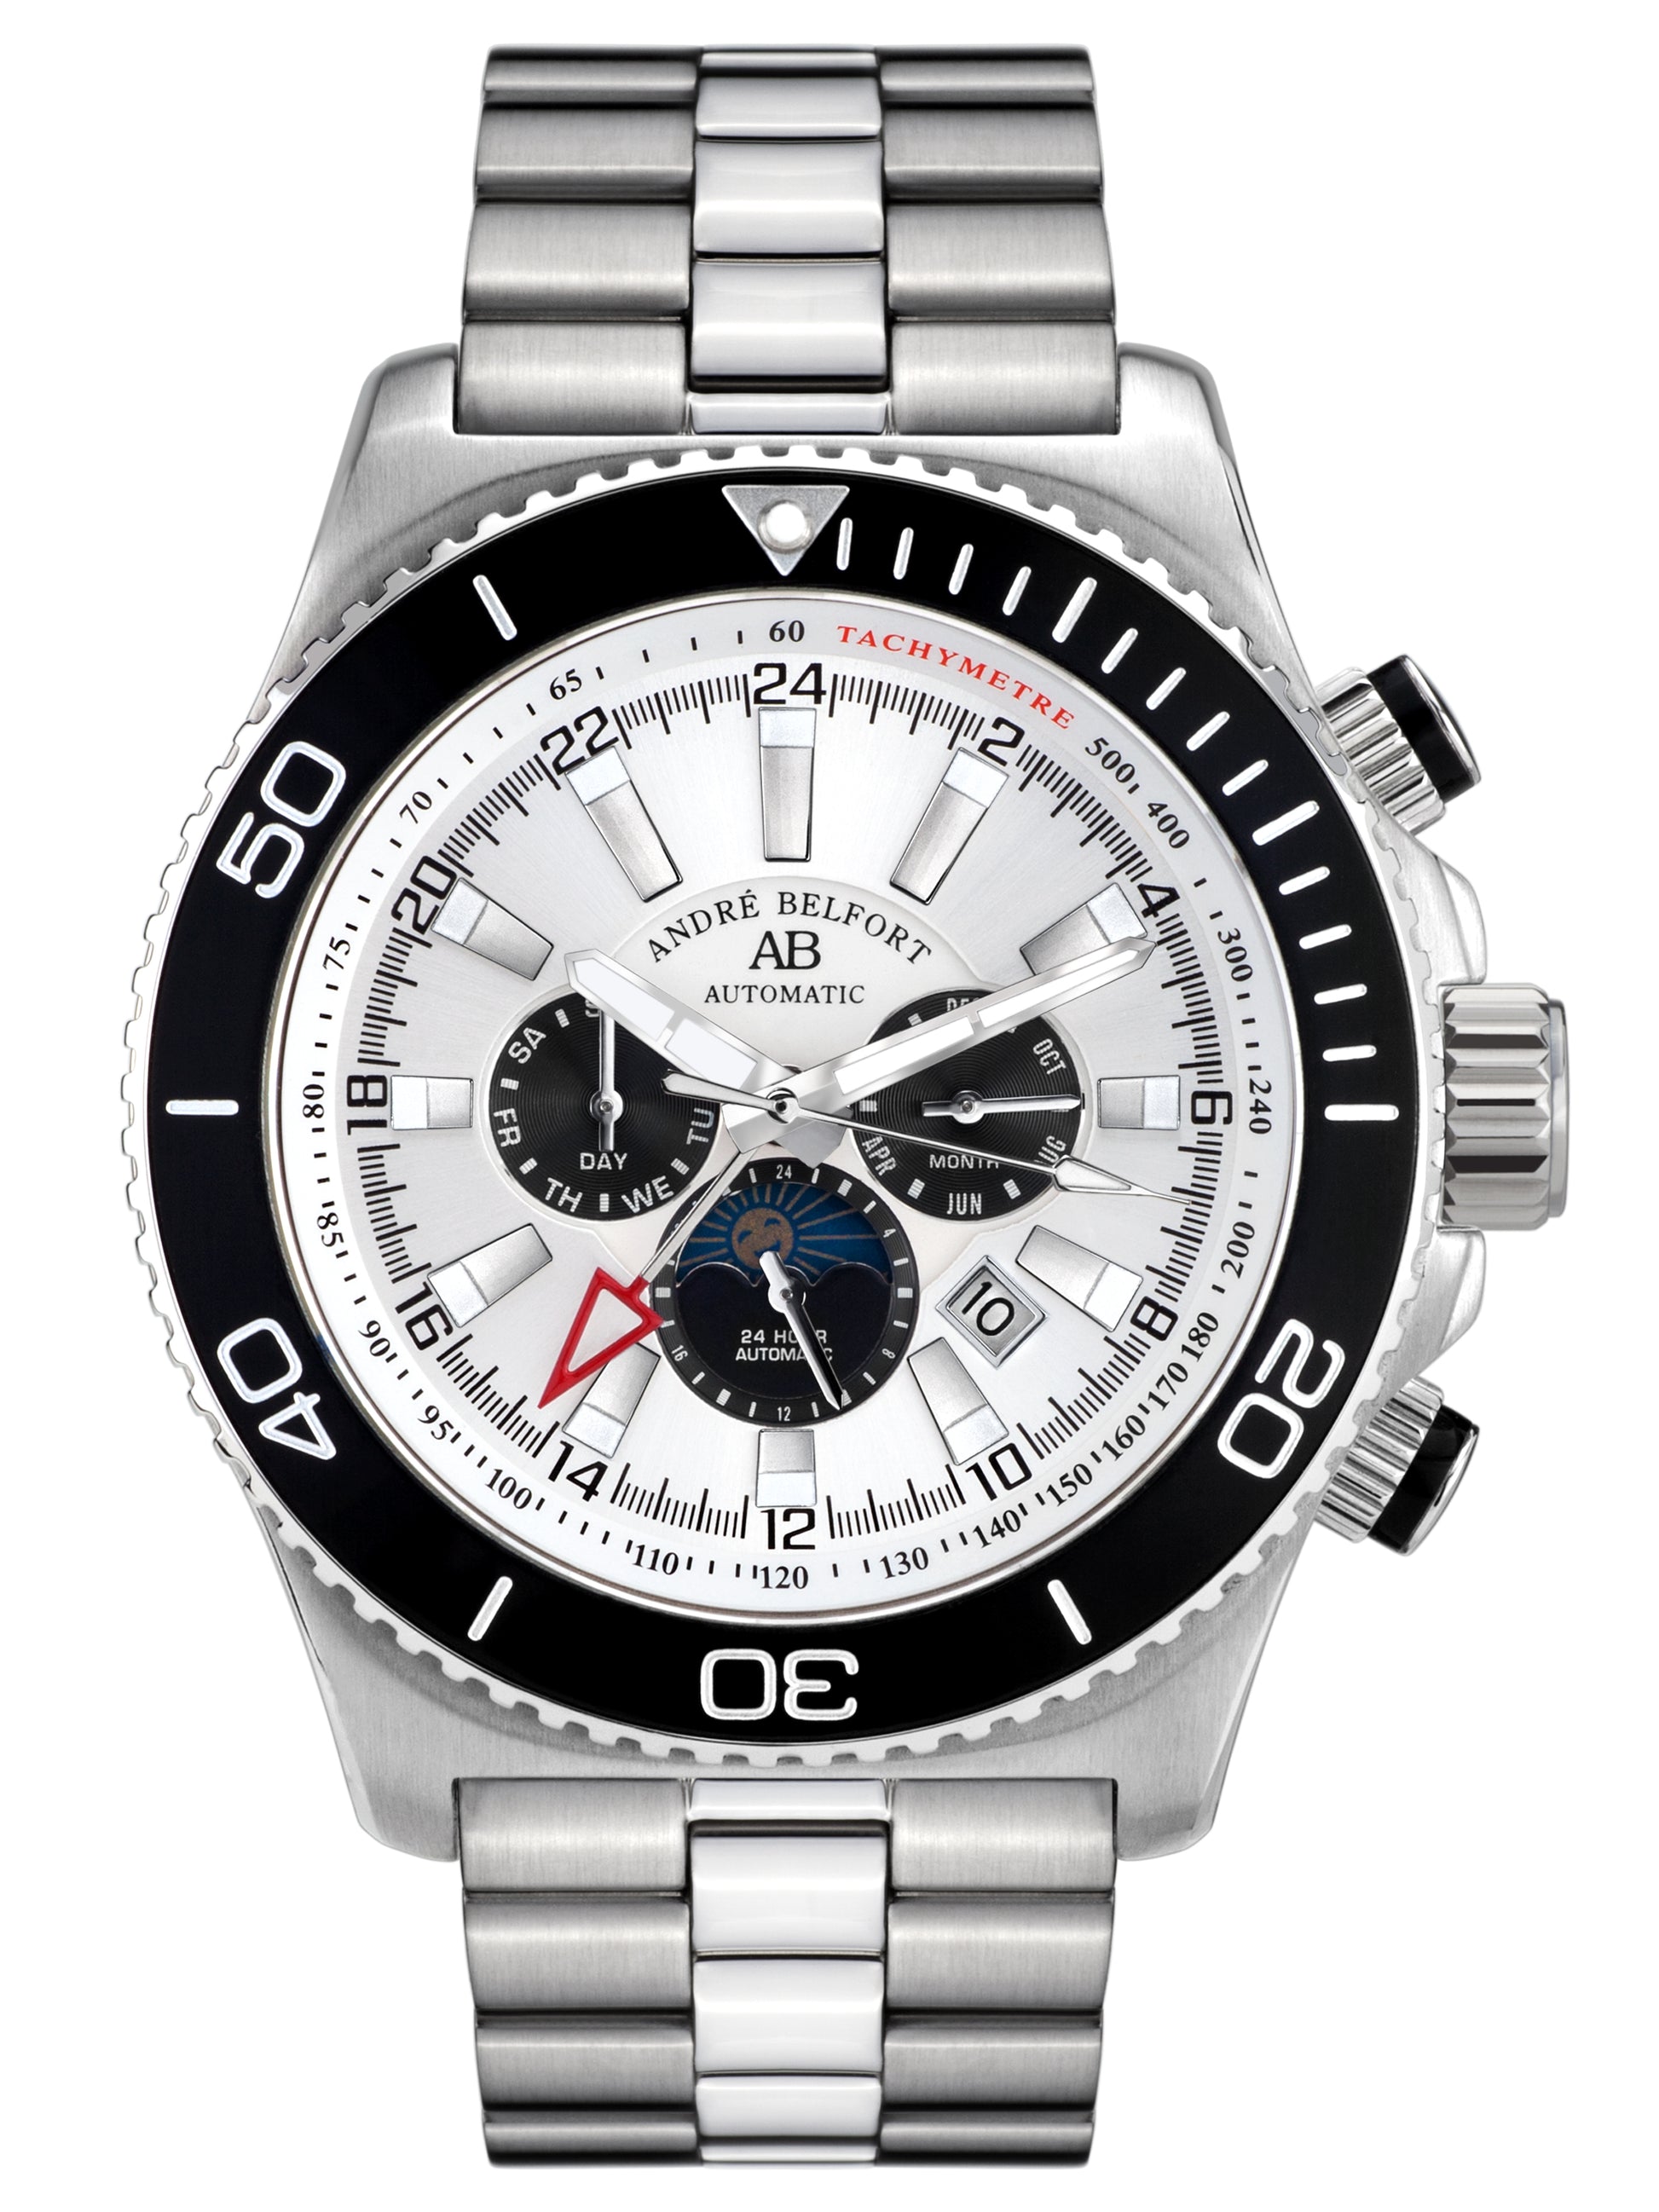 Automatic watches — Le Commandant — André Belfort — steel silver